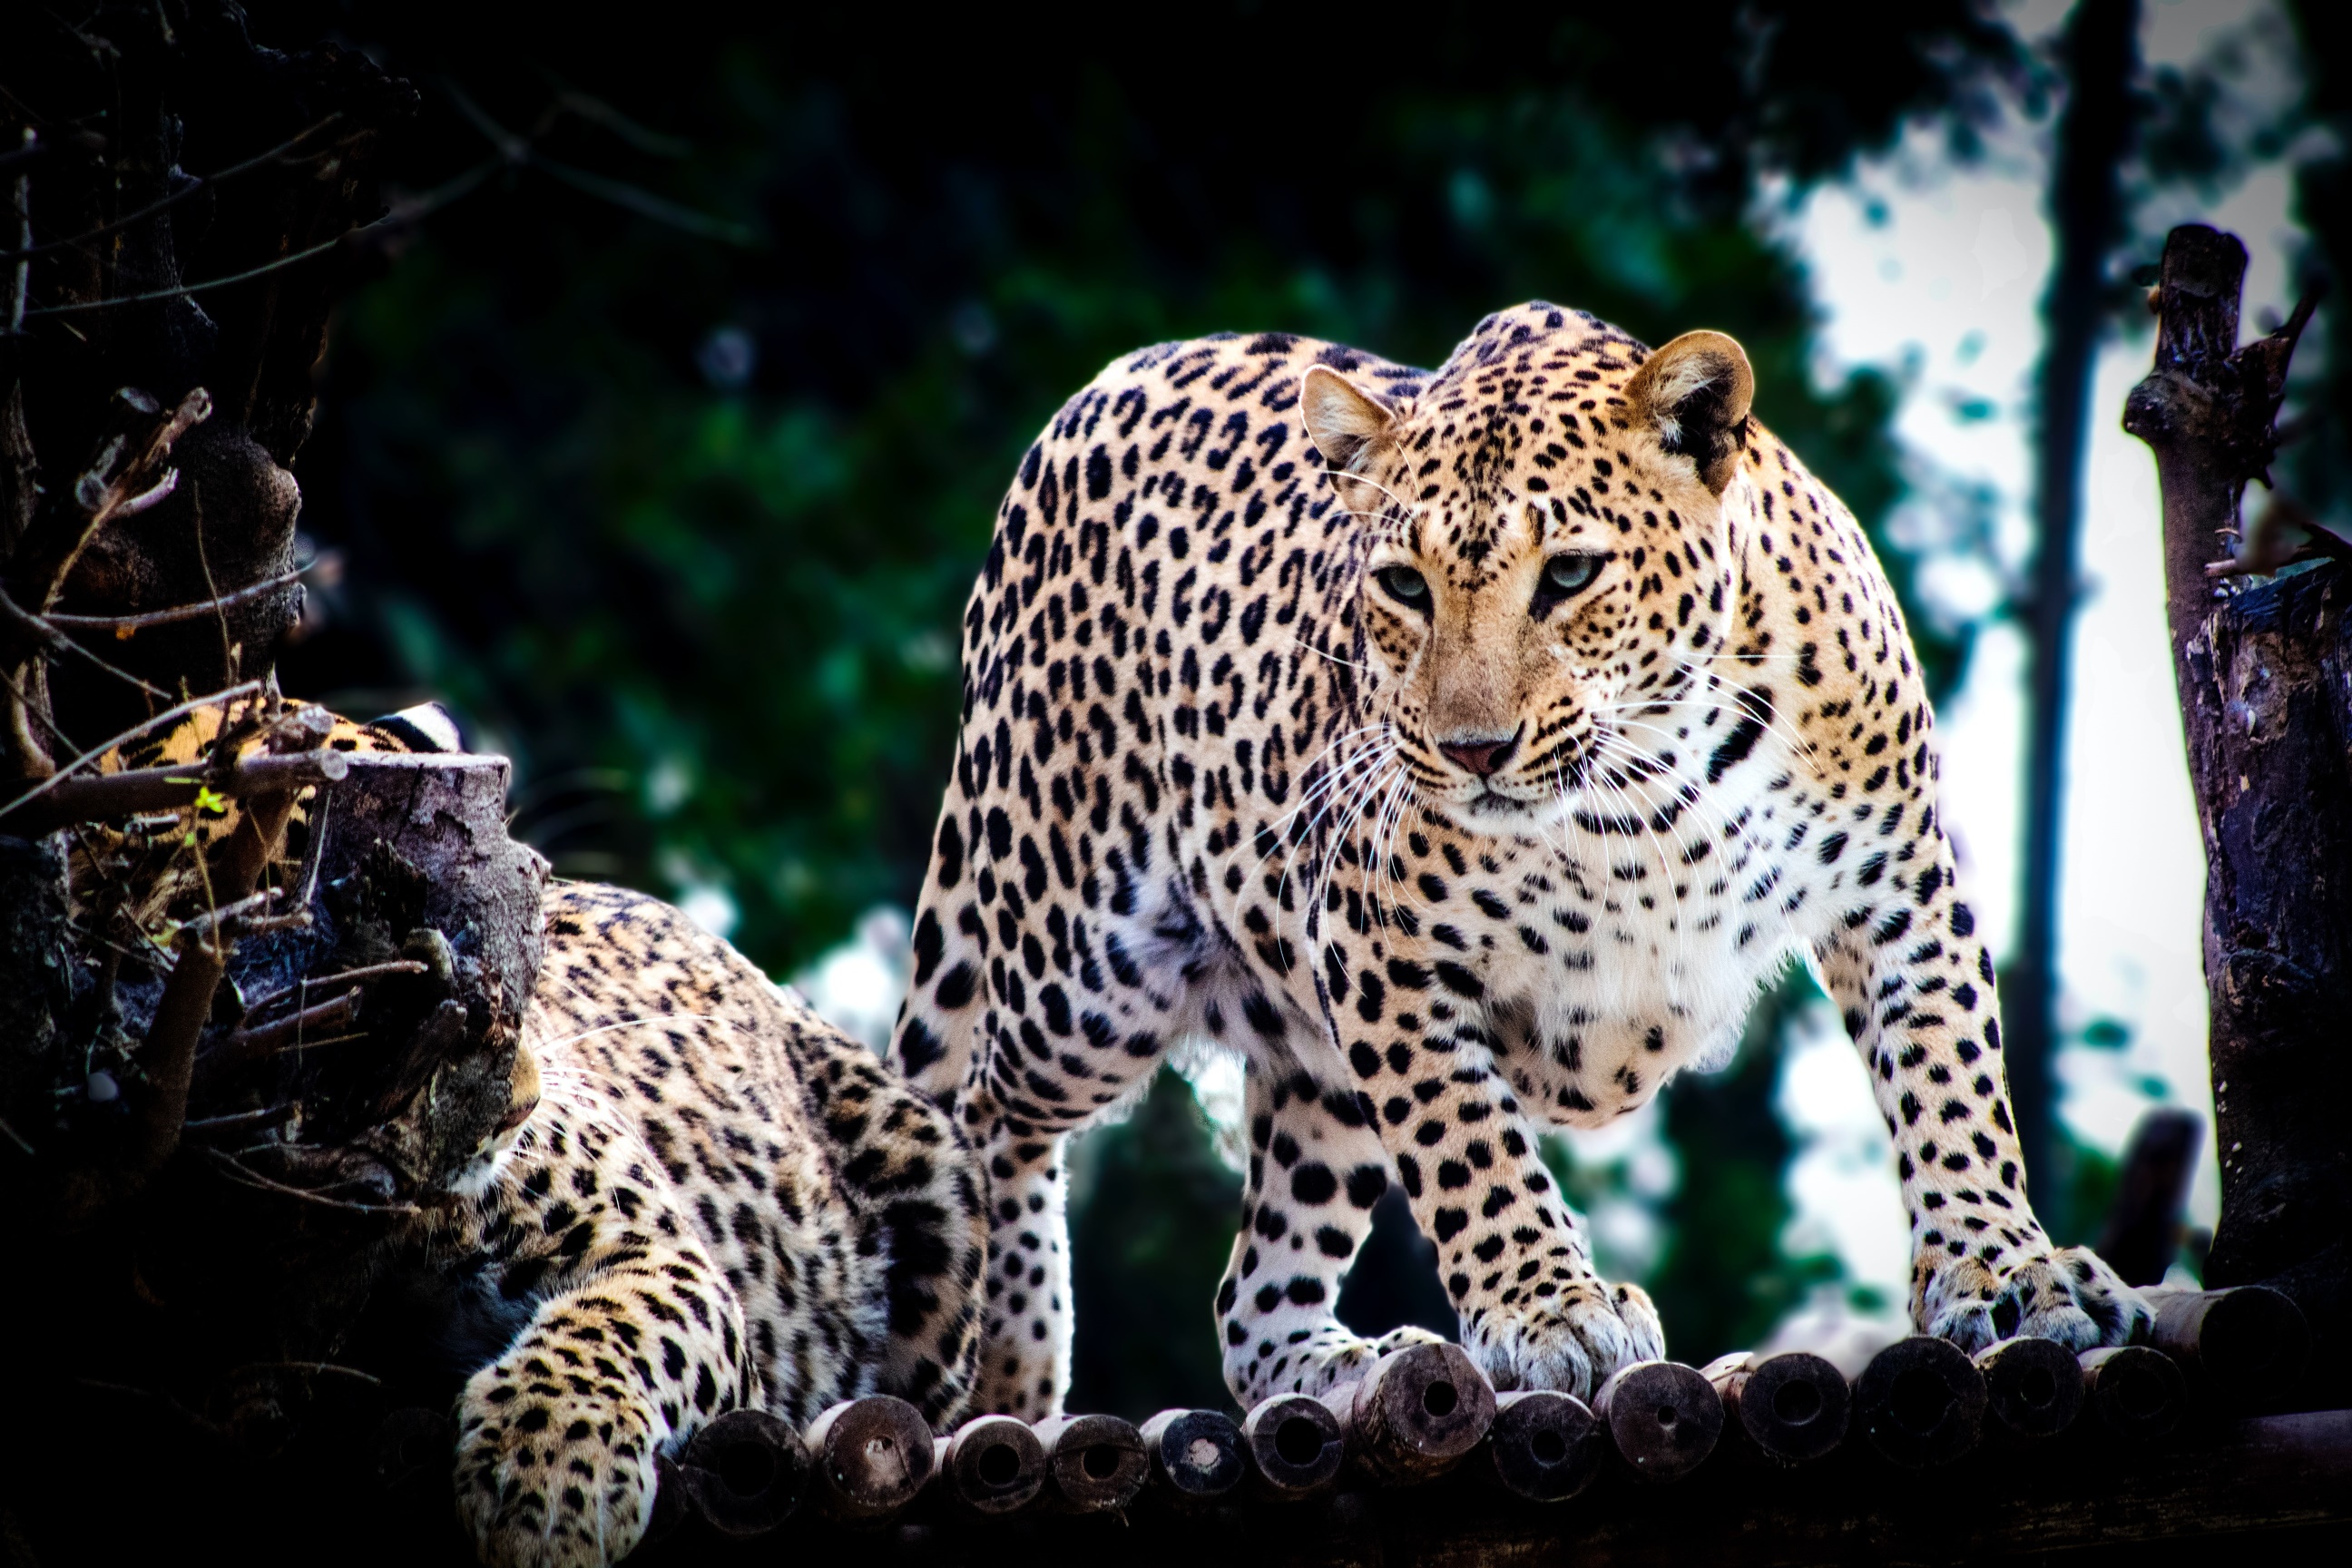 General 2592x1728 animals nature photography feline mammals jaguars